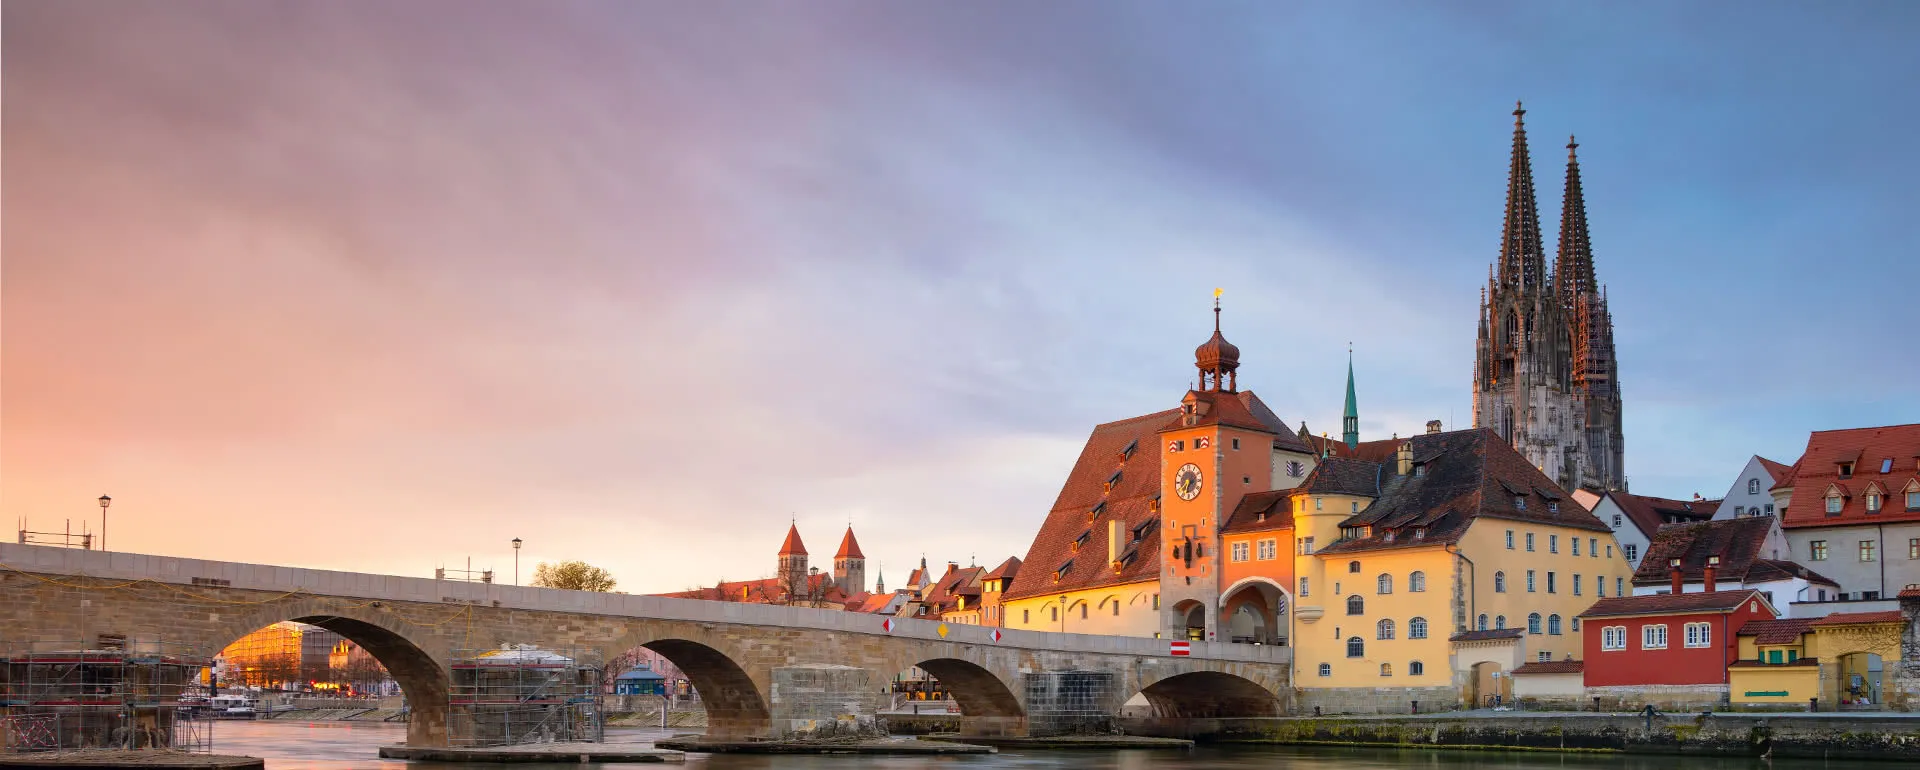 Regensburg - the destination for business travel